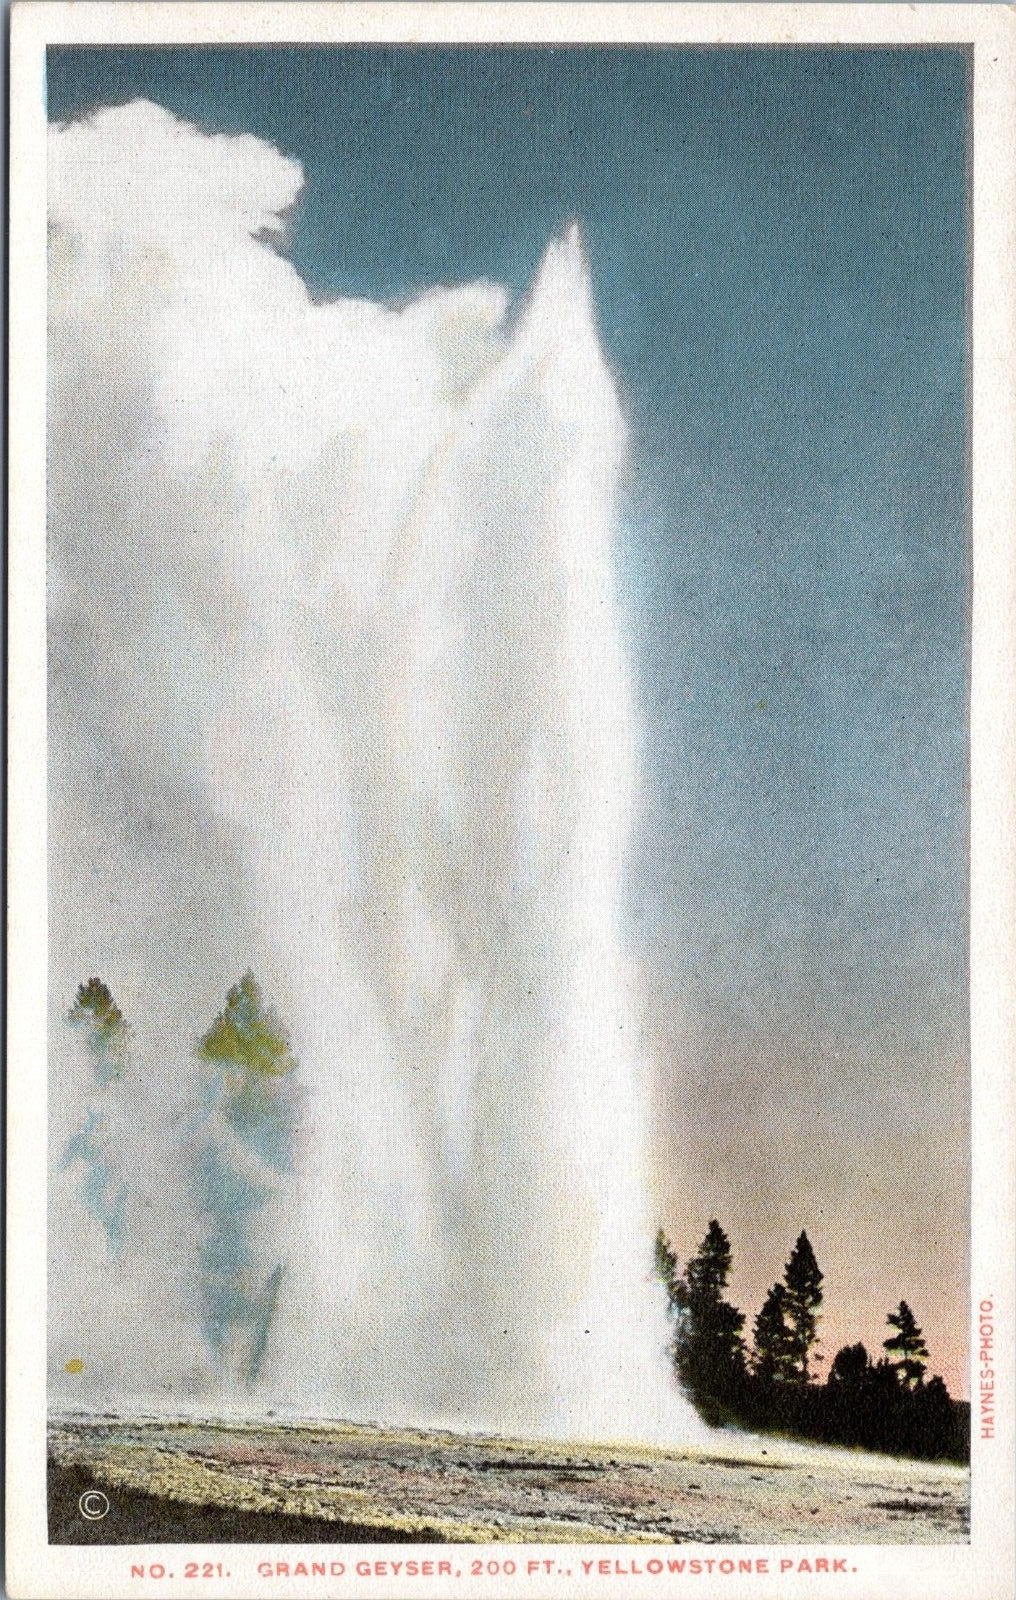 Grand Geyser, Yellowstone Park Wyoming- Haynes Postcard 221 - 200 series